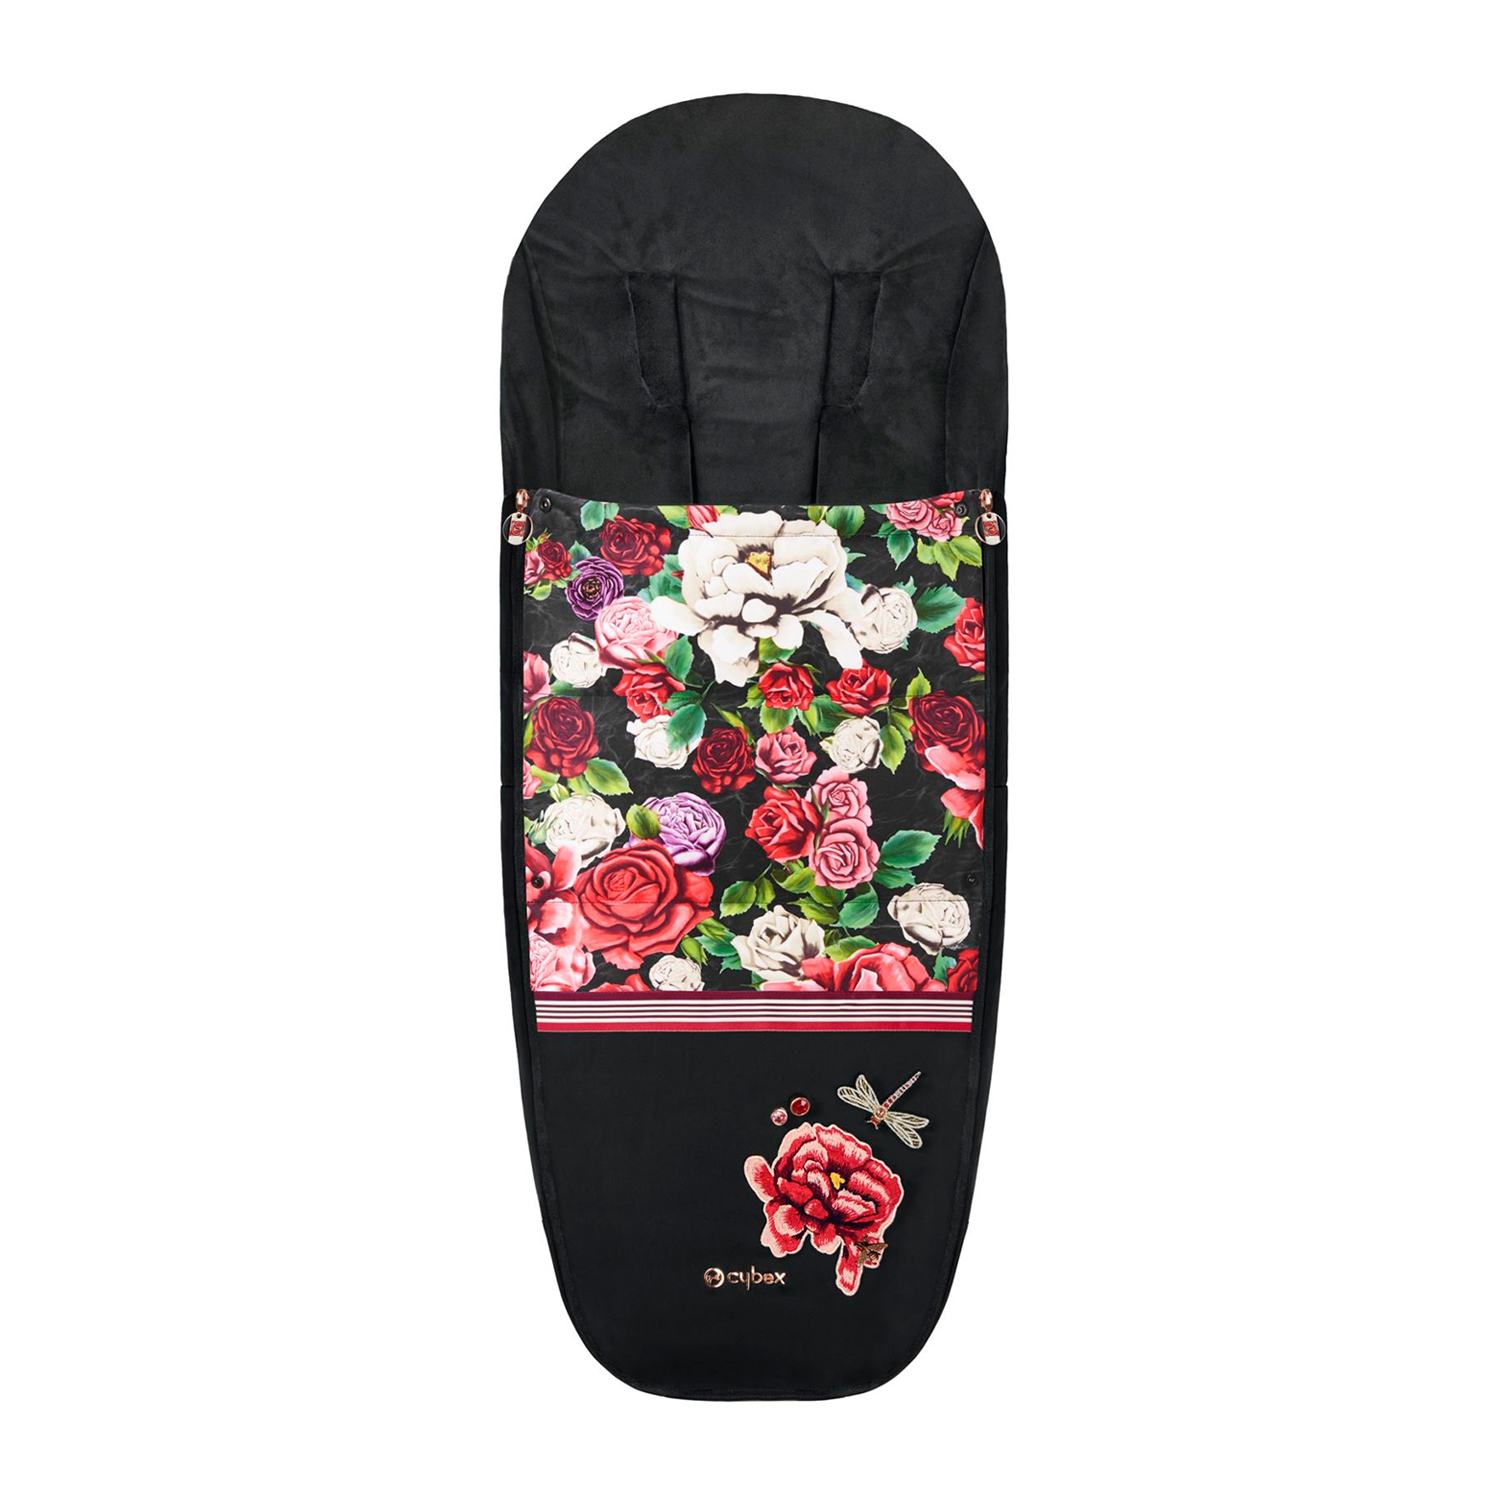 Накидка для ног для коляски PRIAM Spring Blossom Dark CYBEX, цвет нет цвета - фото 1